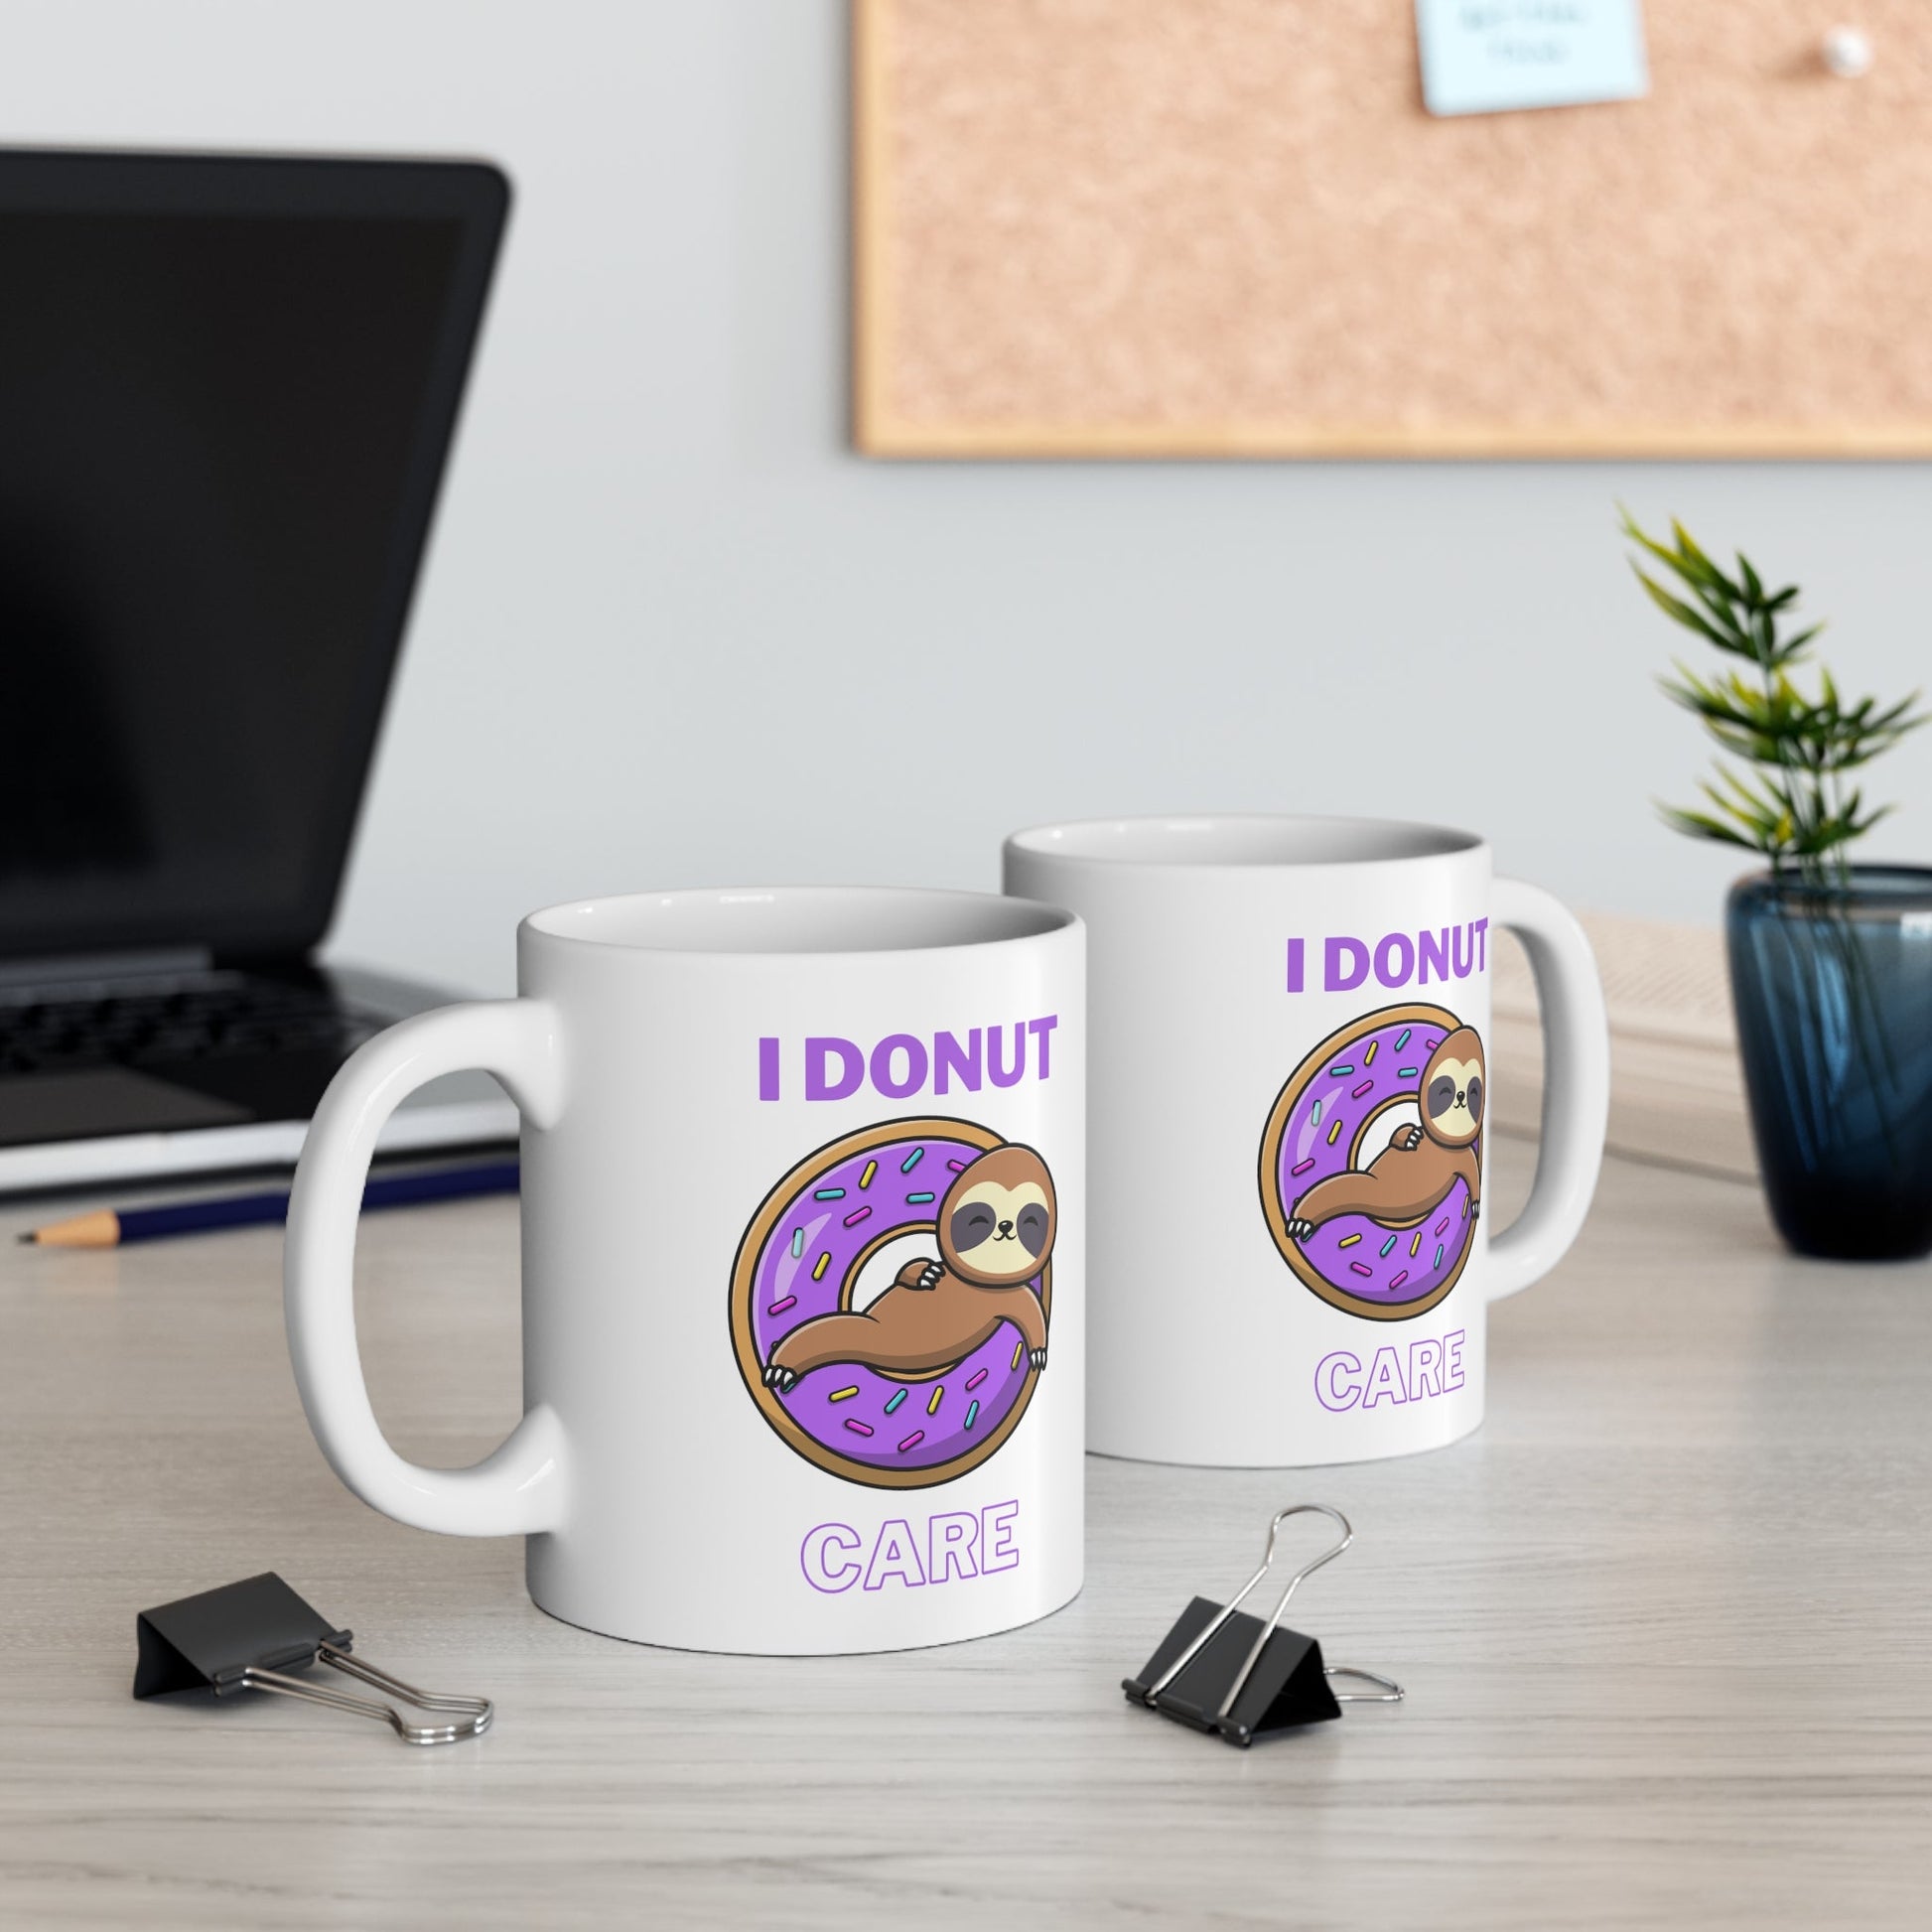 I Donut Care White Mug - Designs by DKMc